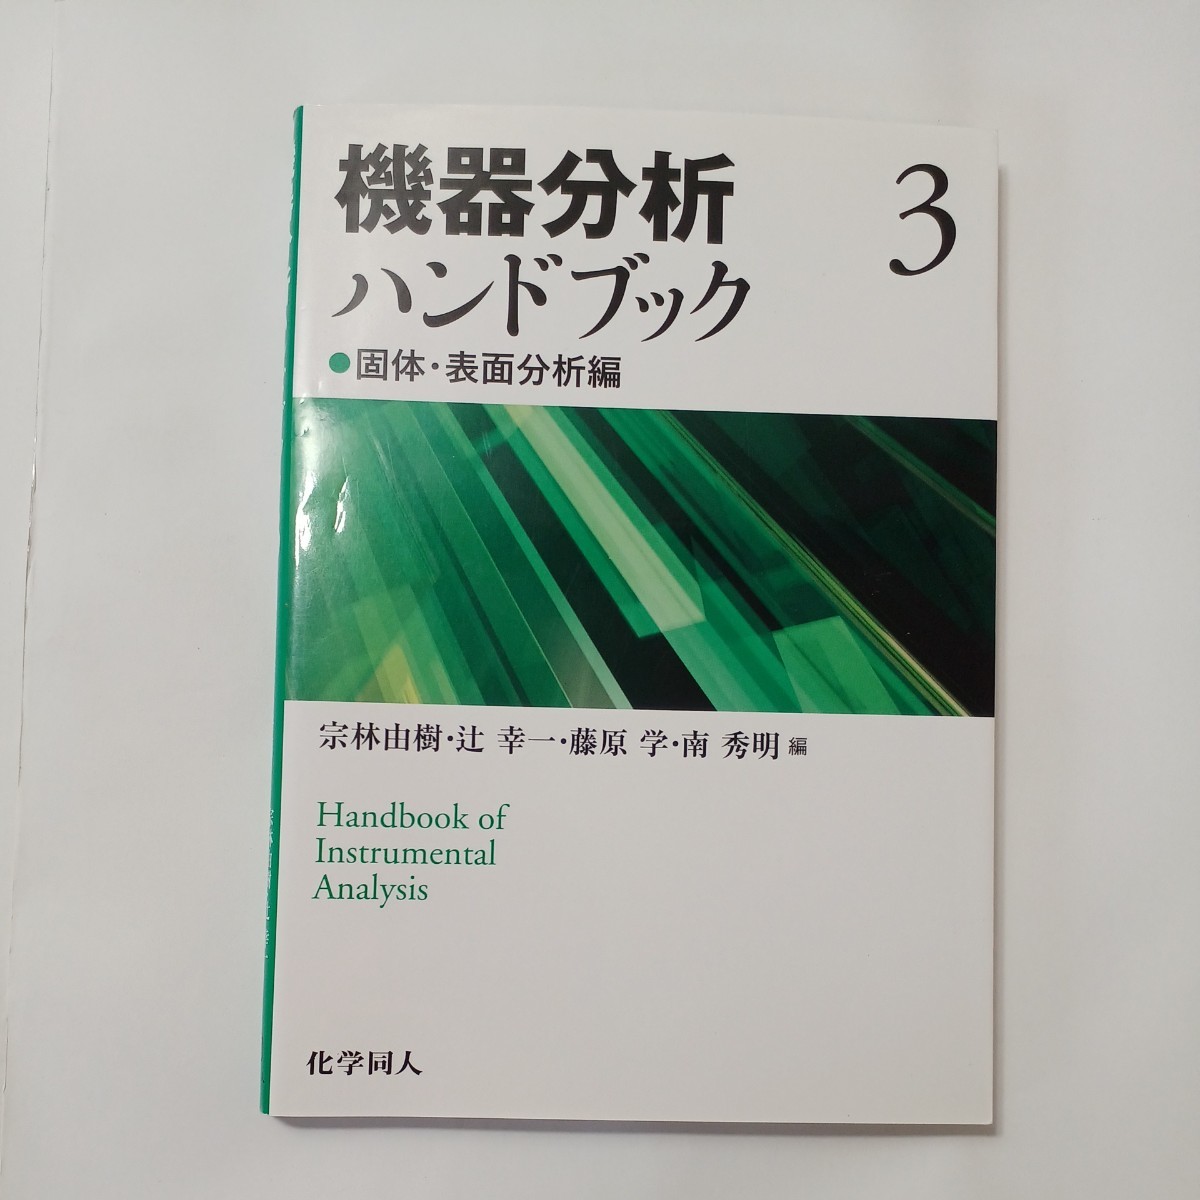 zaa-507! оборудование анализ рука книжка (3). body * поверхность анализ сборник ..../.. один / Fujiwara ./ юг превосходящий Akira [ сборник ] химия такой же человек (2021/03 продажа )